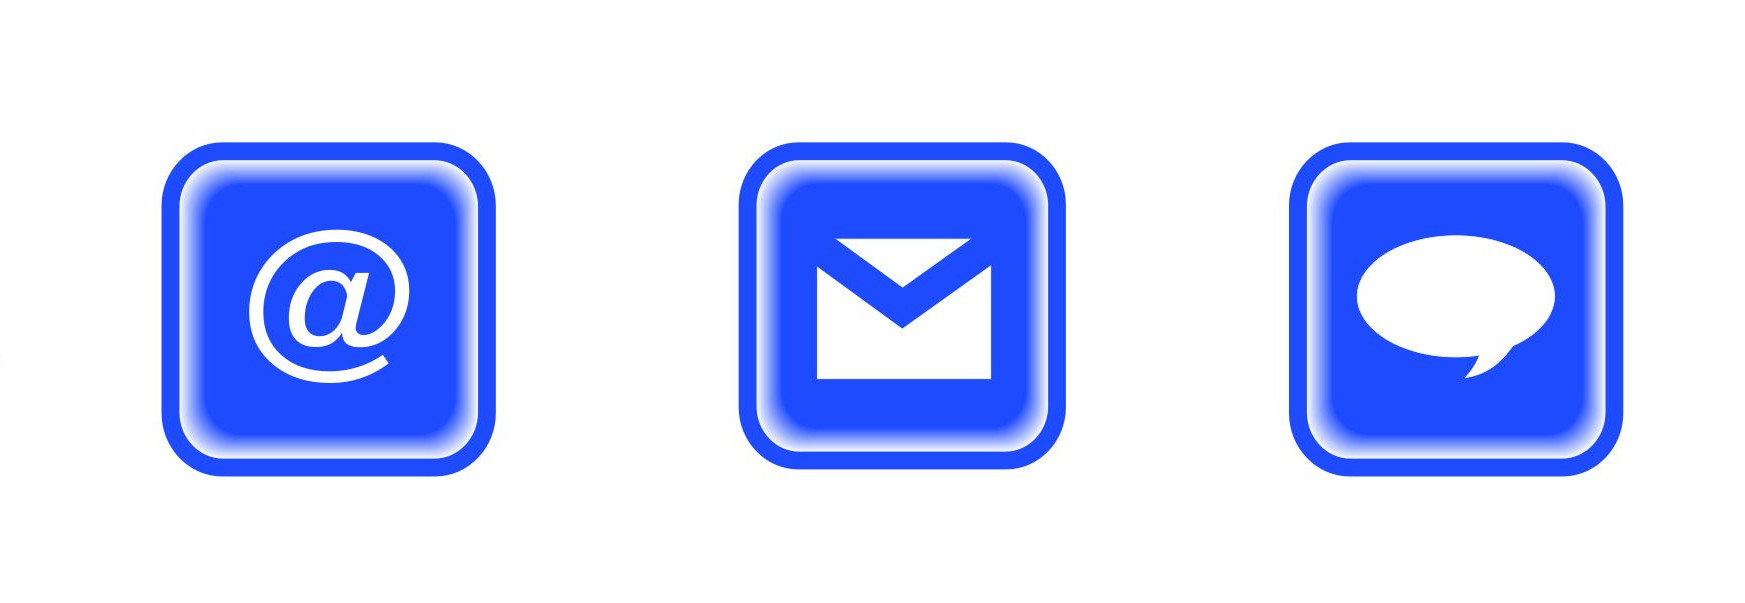  mailing list  strategy symbol